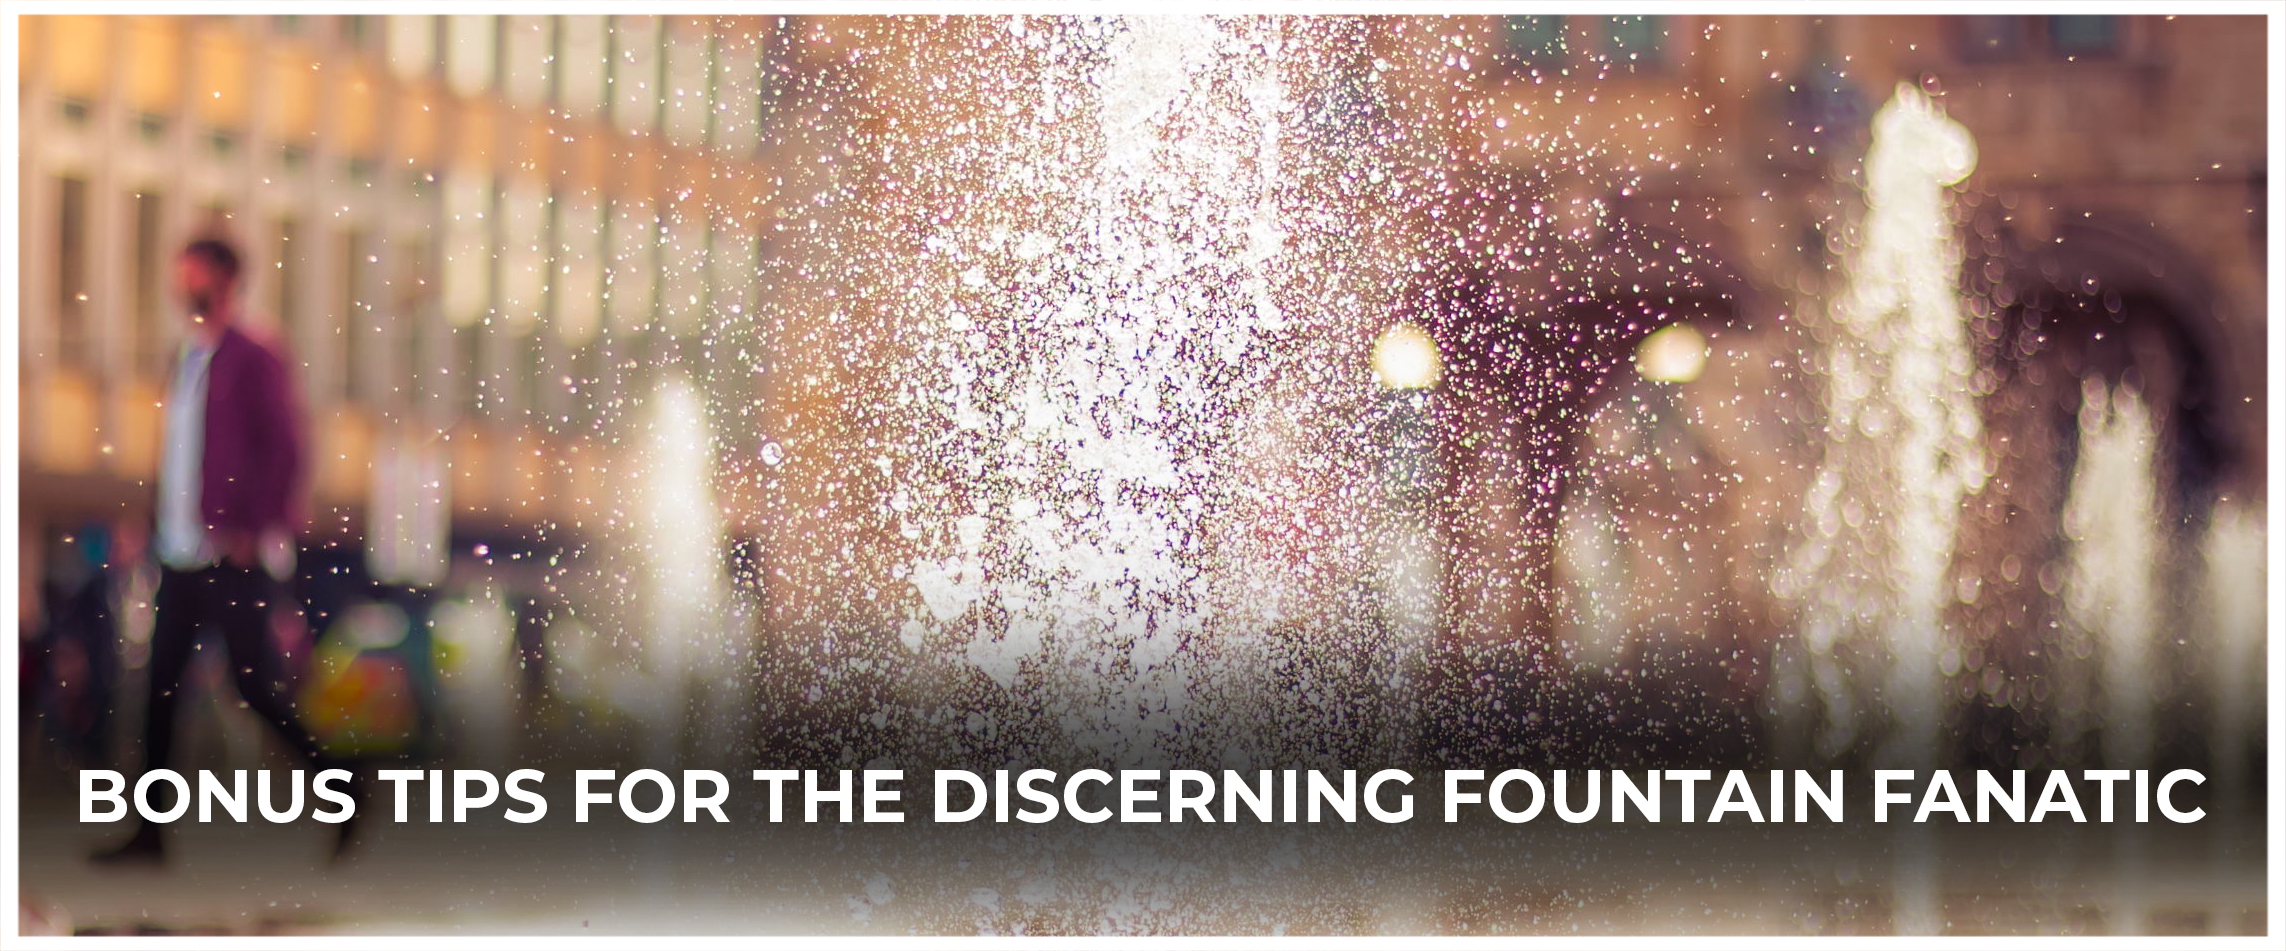 Bonus Tips for the Discerning Fountain Fanatic